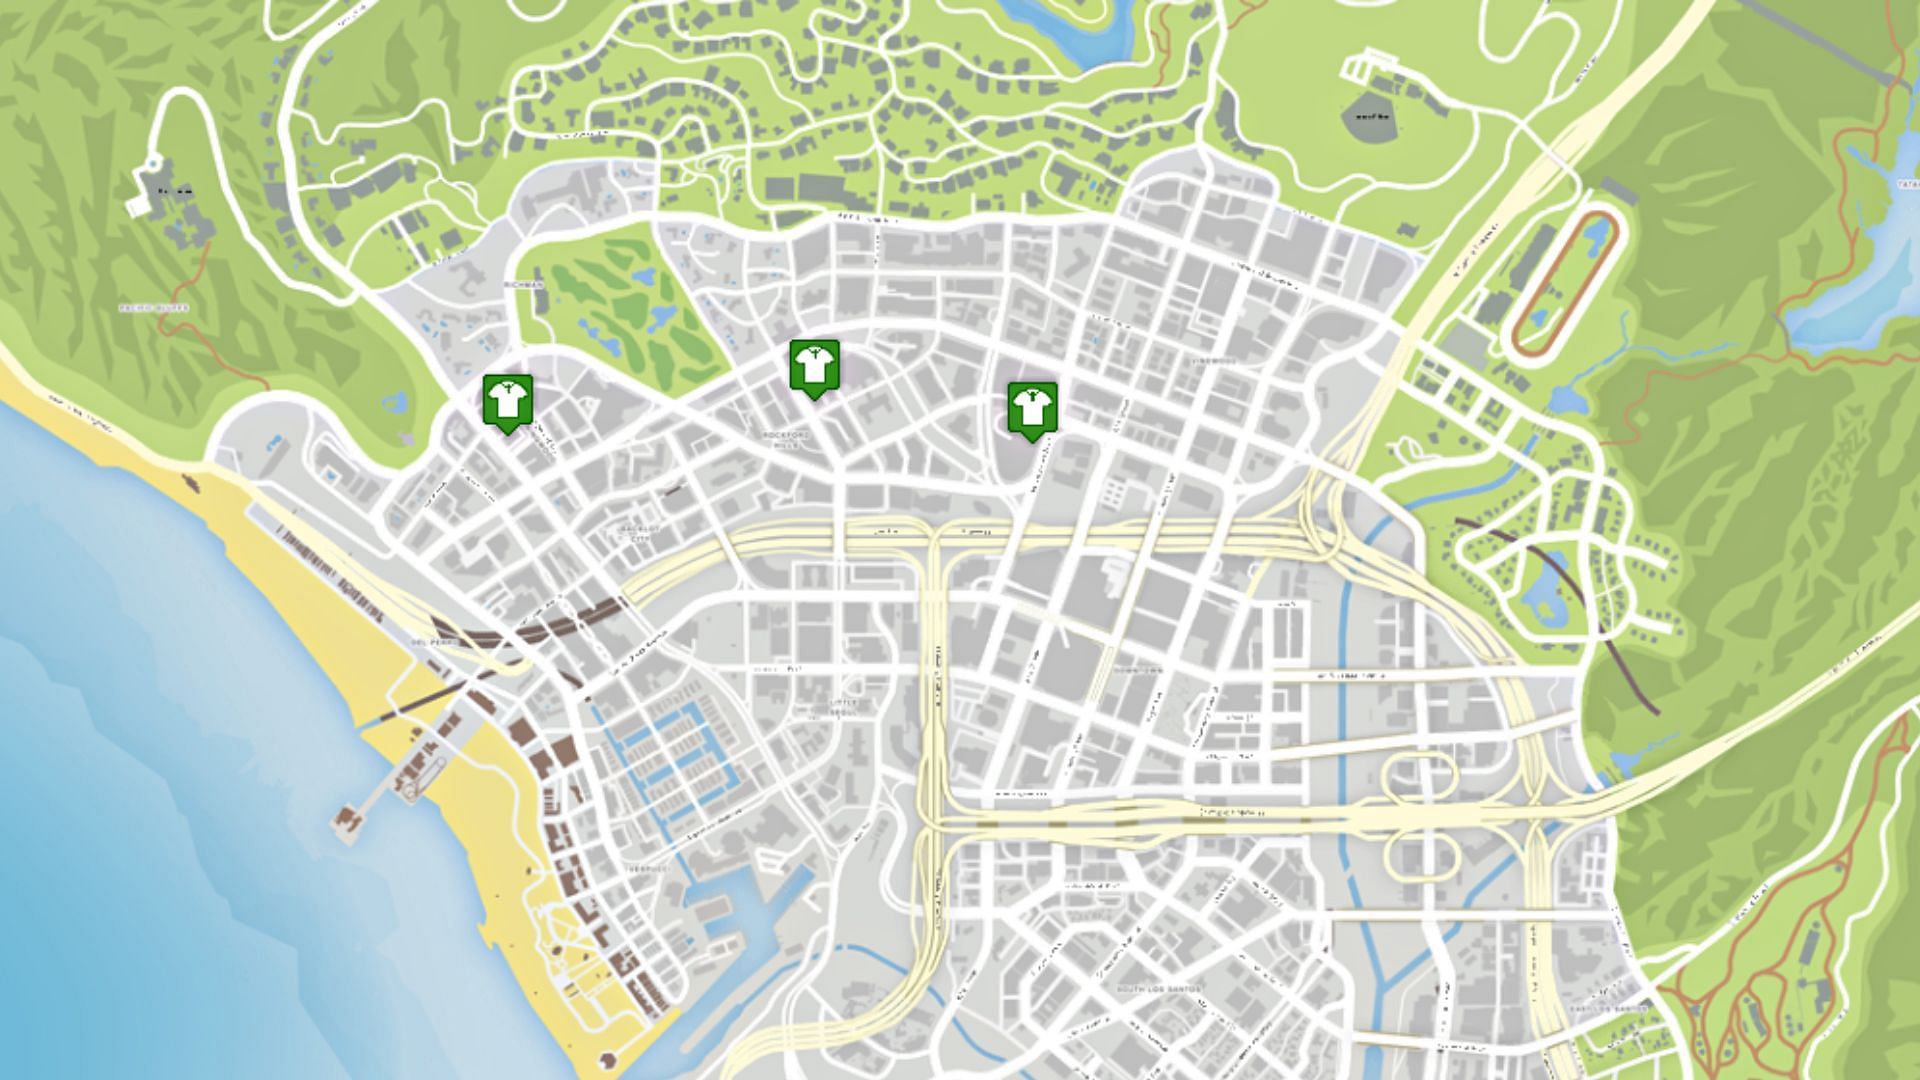 Ponsonbys locations (Image via gta-5-map.com)